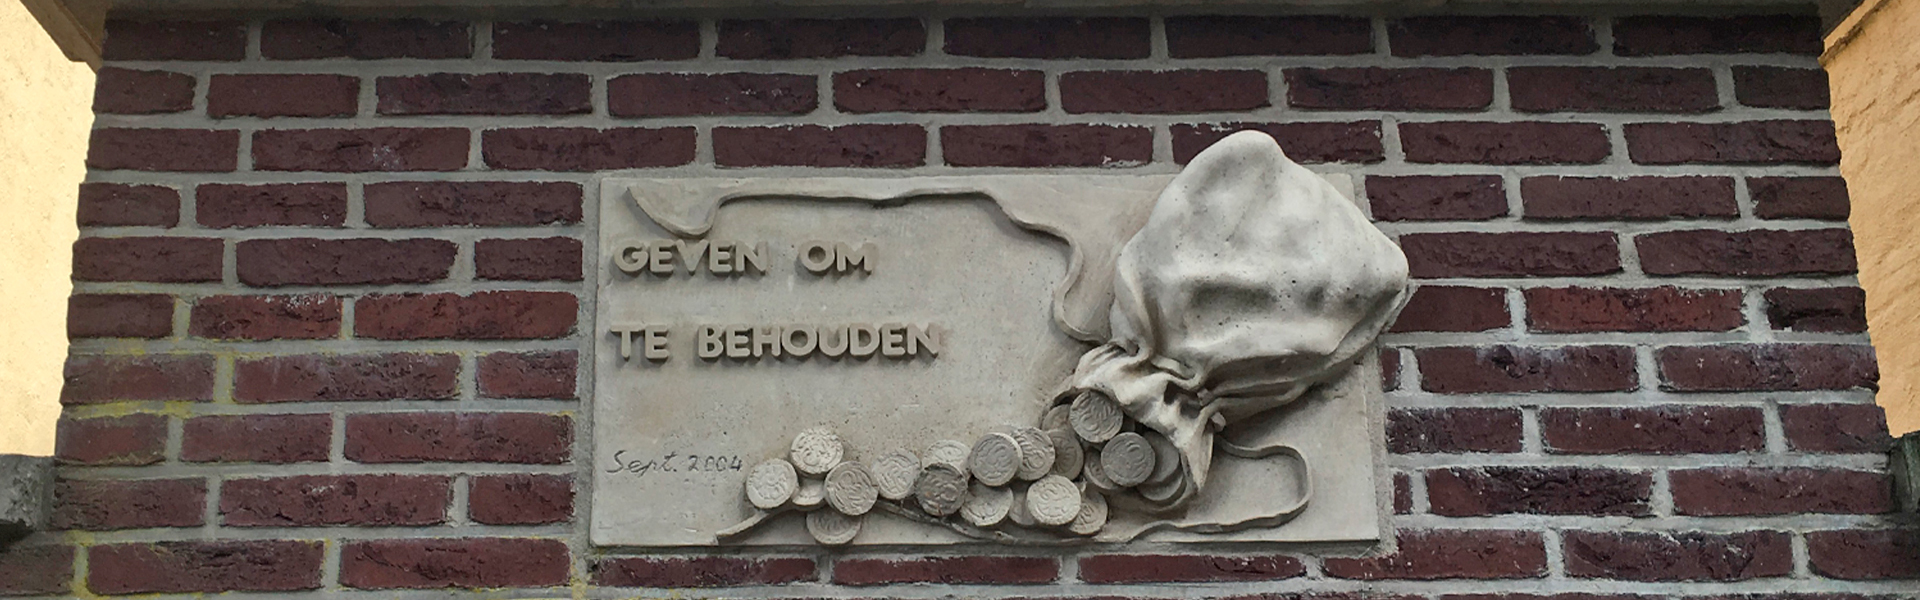 Ritske Boelema Gasthuis Stichting